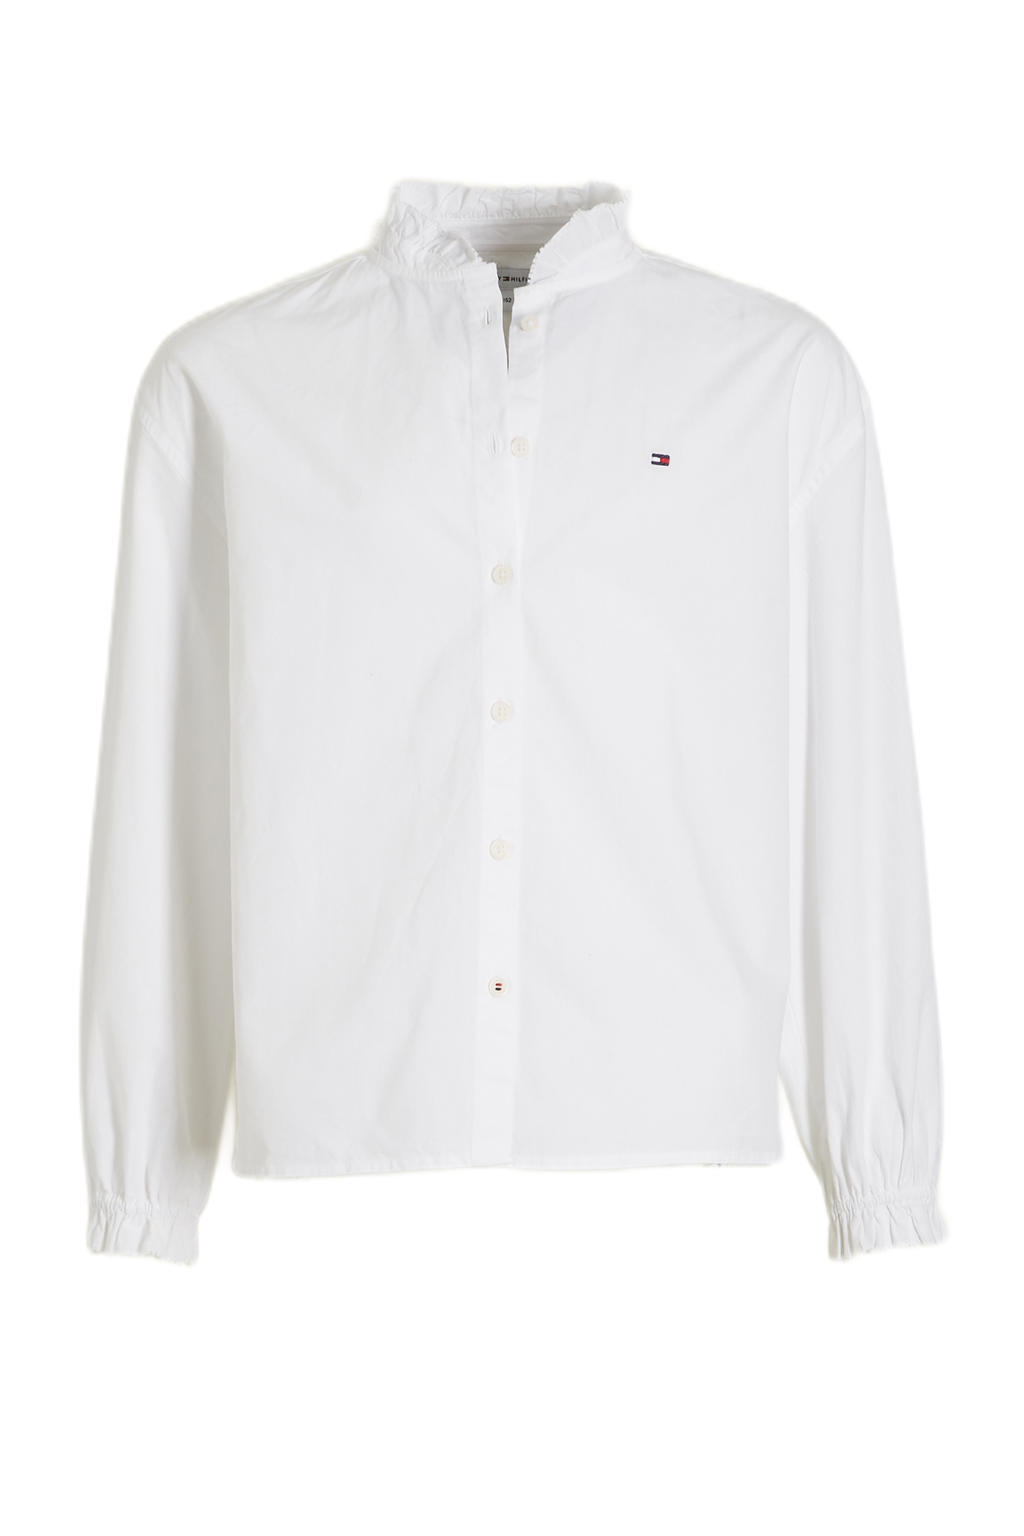 Witte meisjes Tommy Hilfiger blouse van katoen met lange mouwen, button down sluiting en knoopsluiting